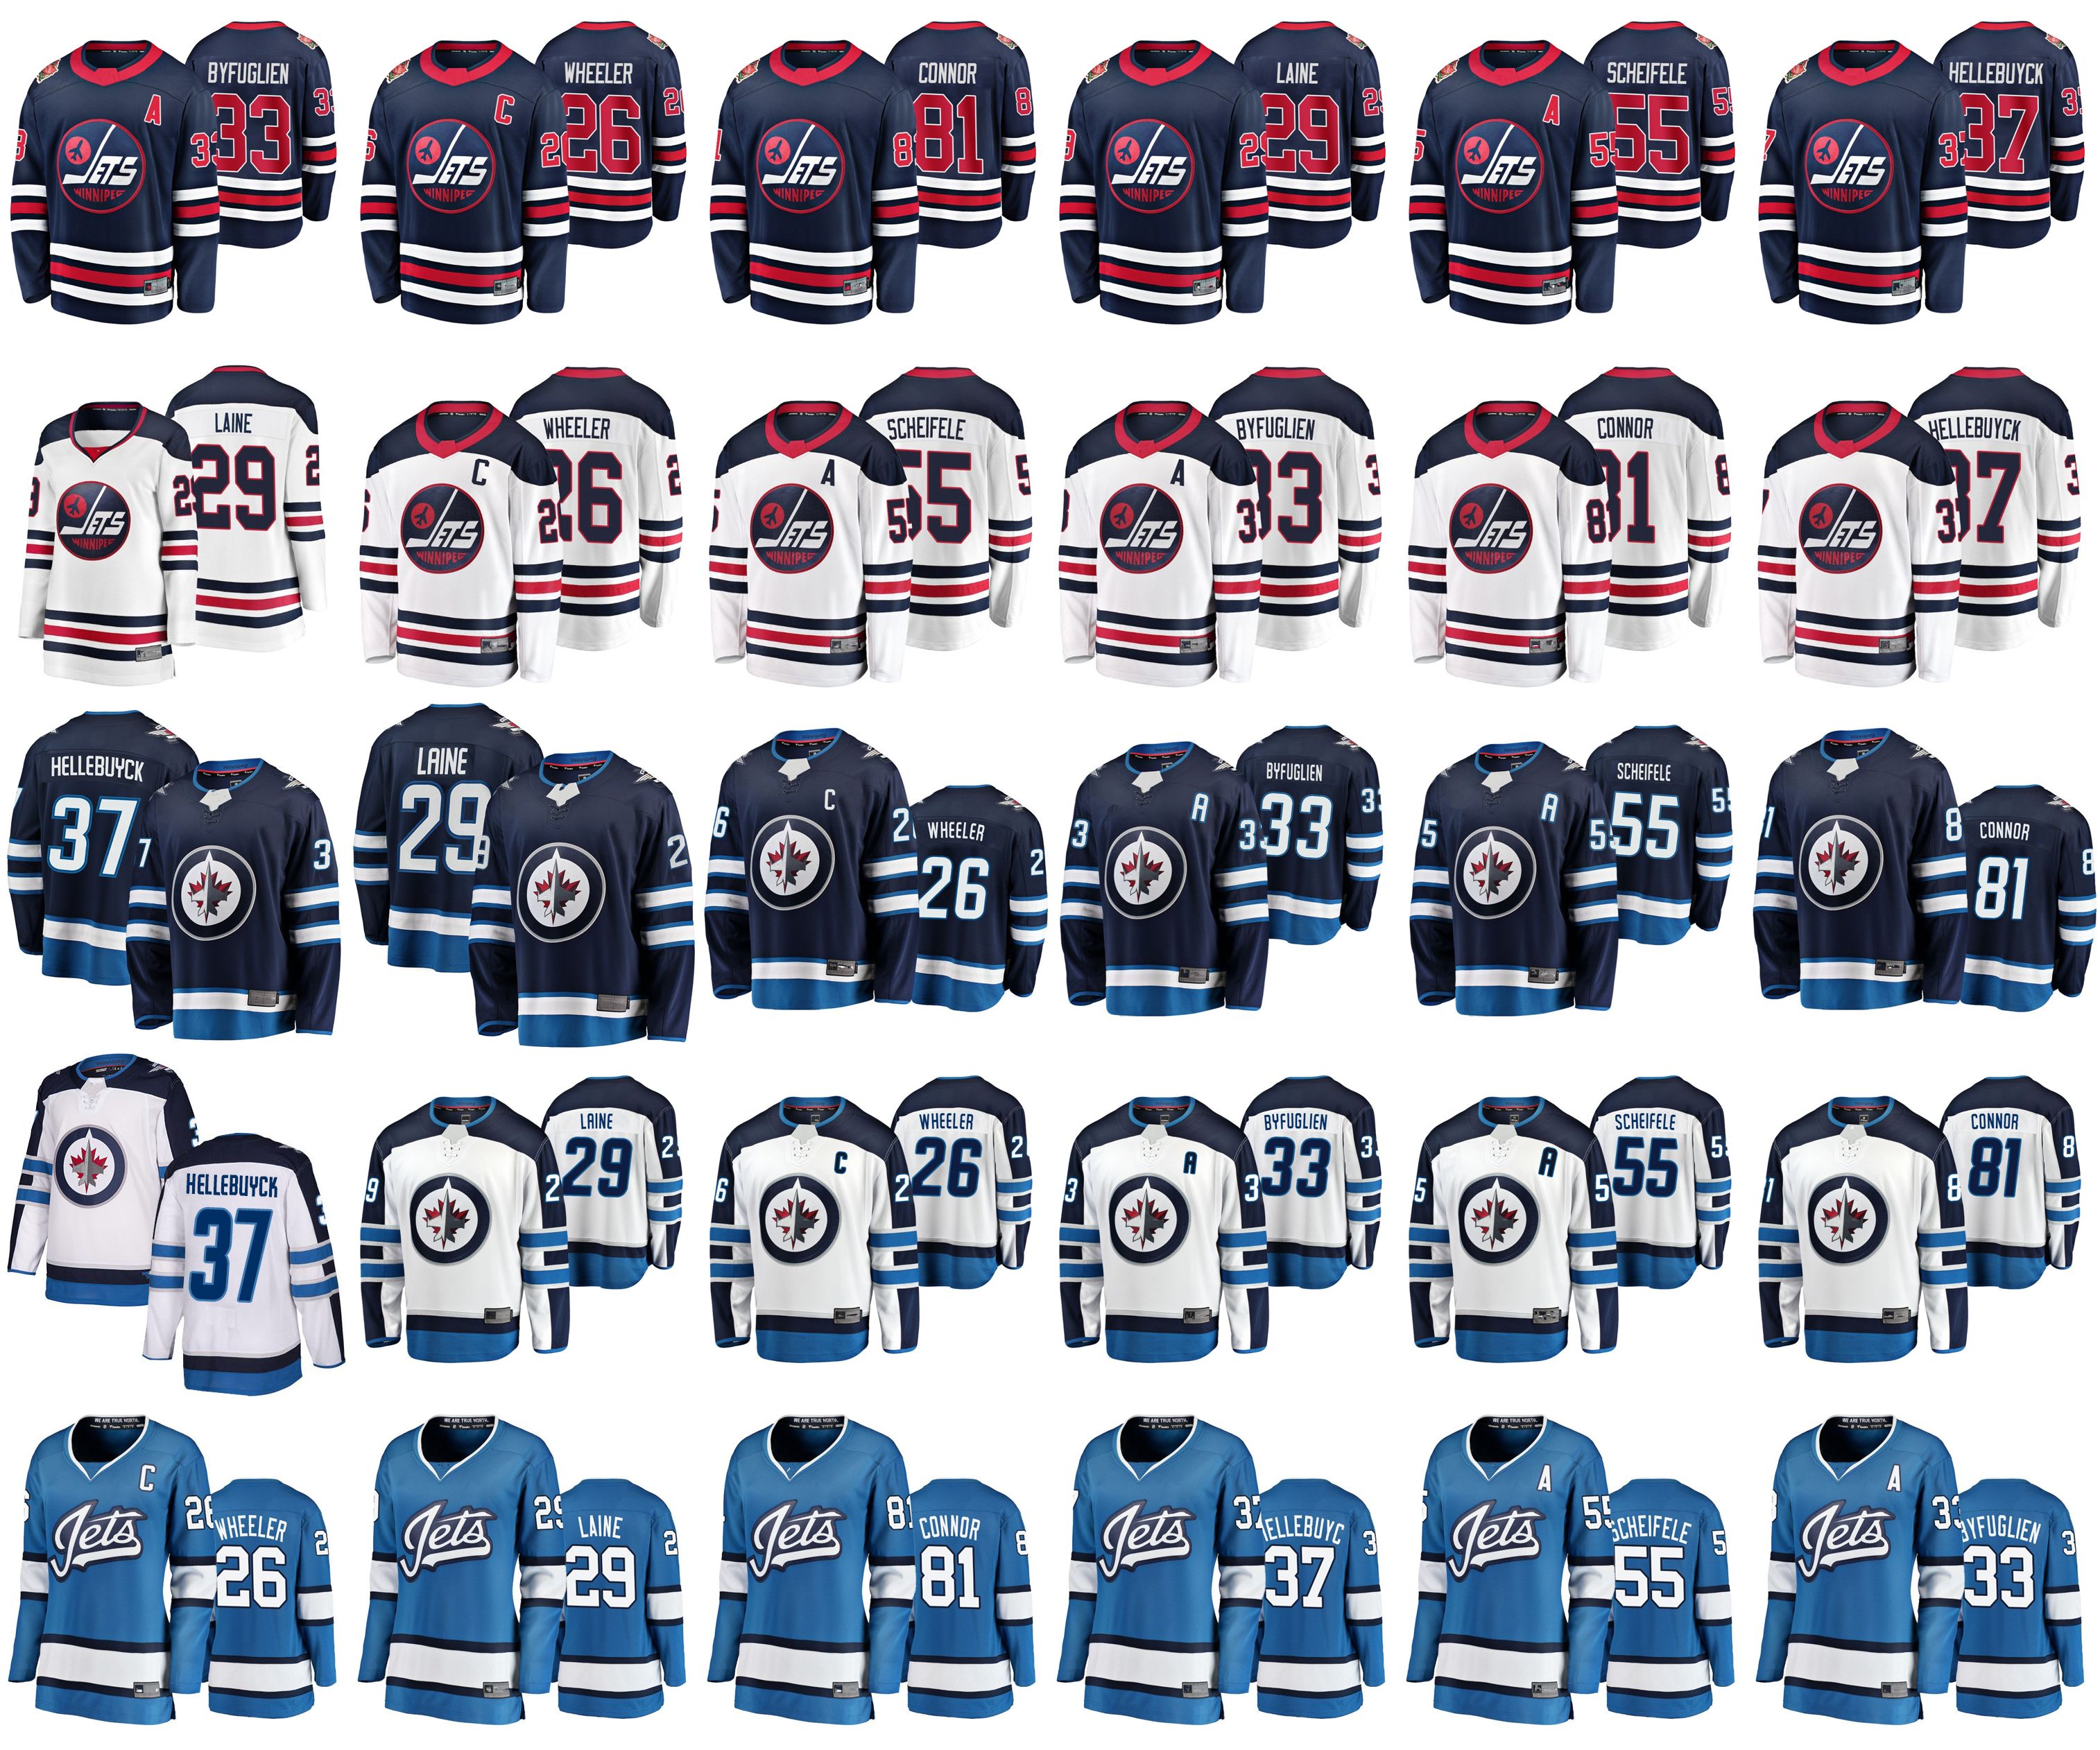 

Winnipeg Jets Jerseys Mens 55 Mark Scheifele Jersey 33 Dustin Byfuglien 26 Blake Wheeler Womens Ice Hockey Jerseys Stitched Youth, Men's white away